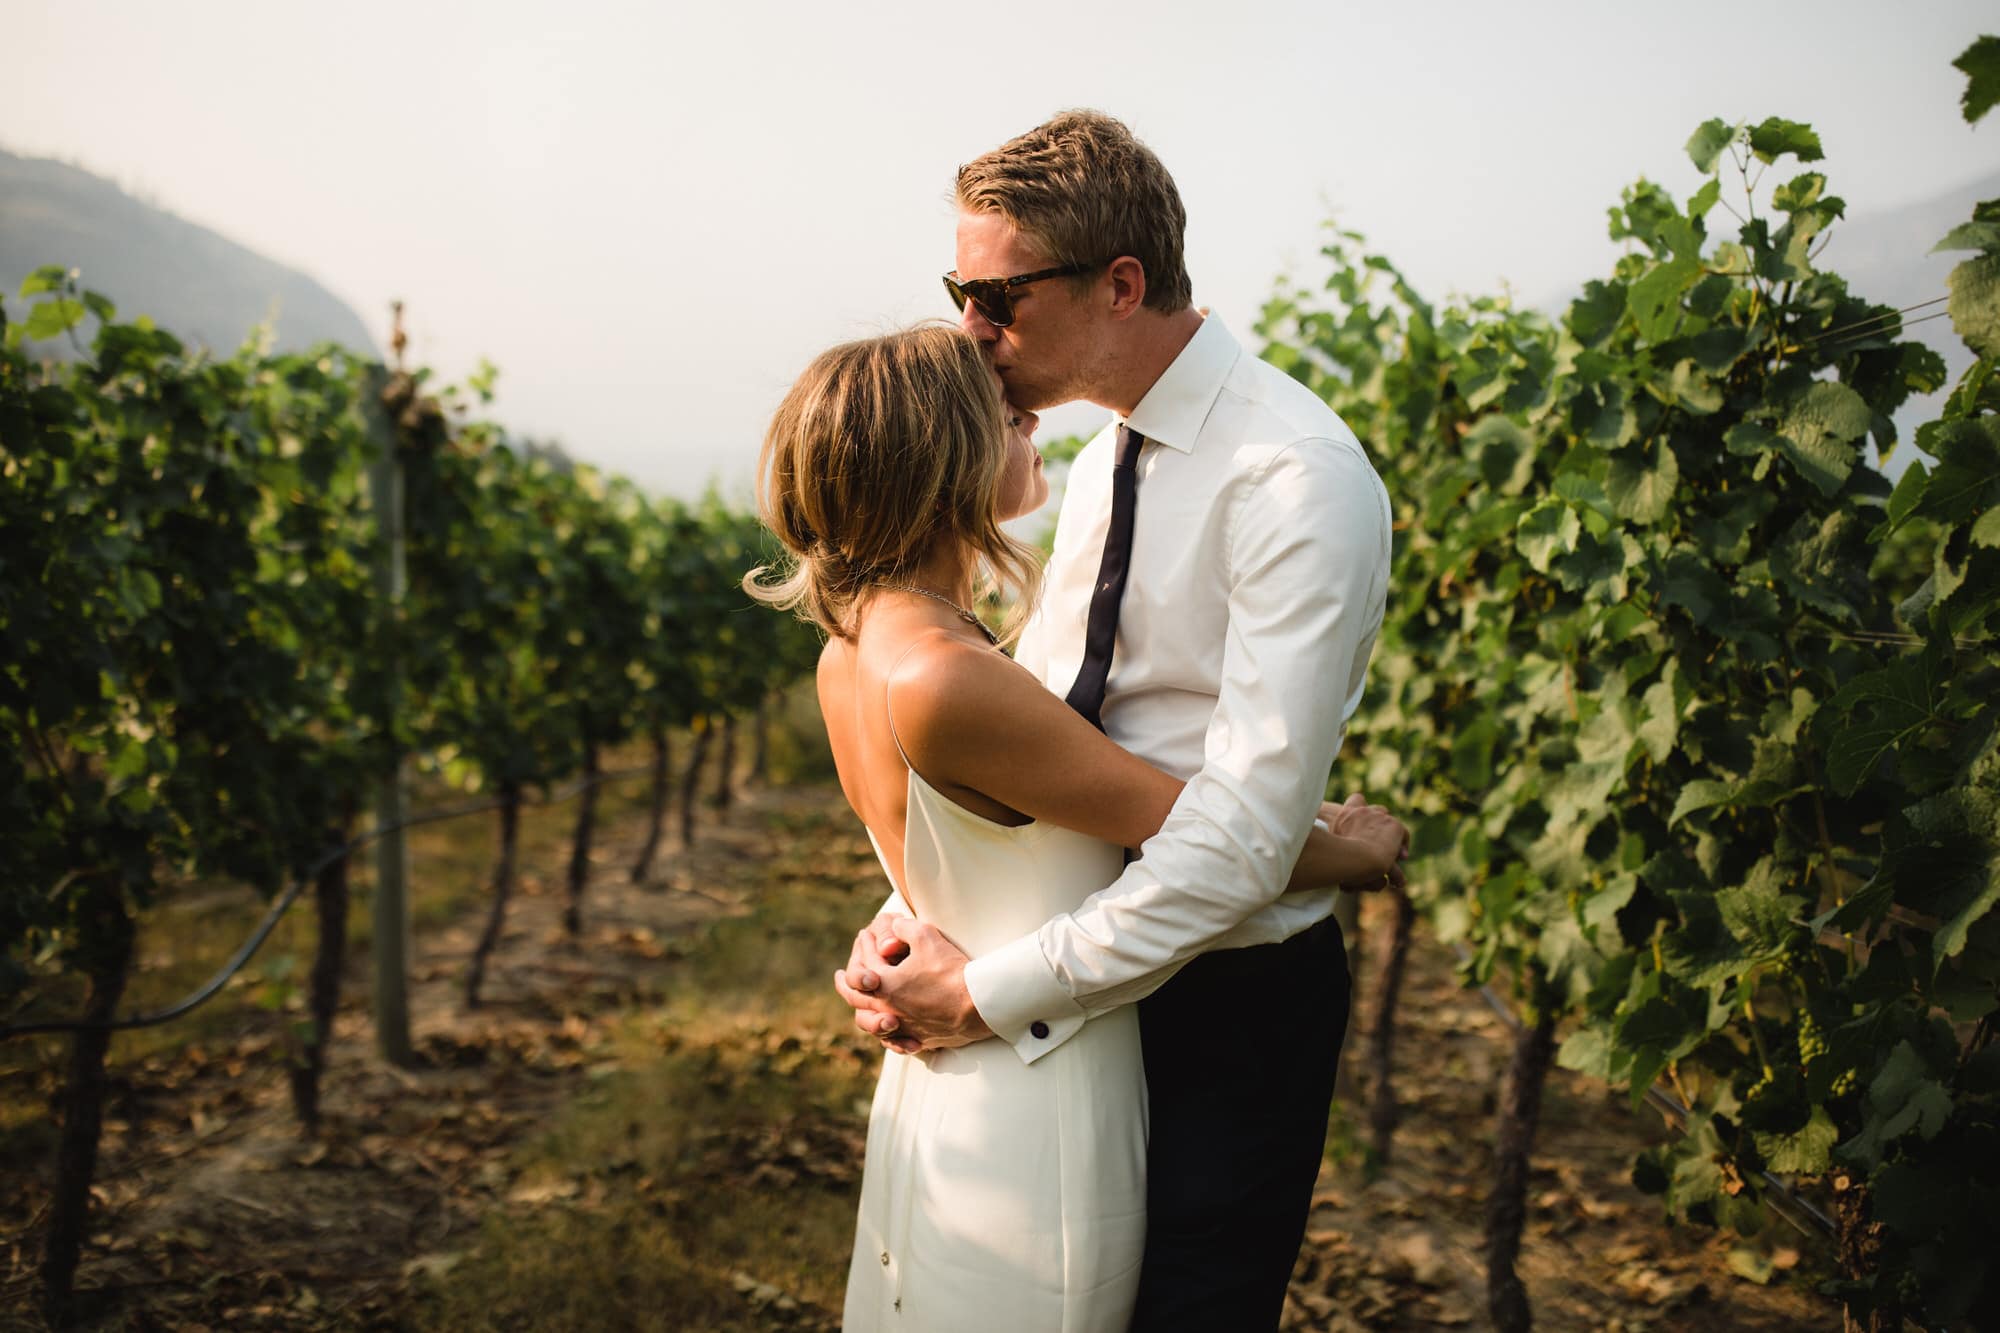 Groom kisses the bride in the vineyard at Evolve Cellars Vineyard on Lake Okanagan, Summerland, BC. Destination wedding photographer Brent Calis.